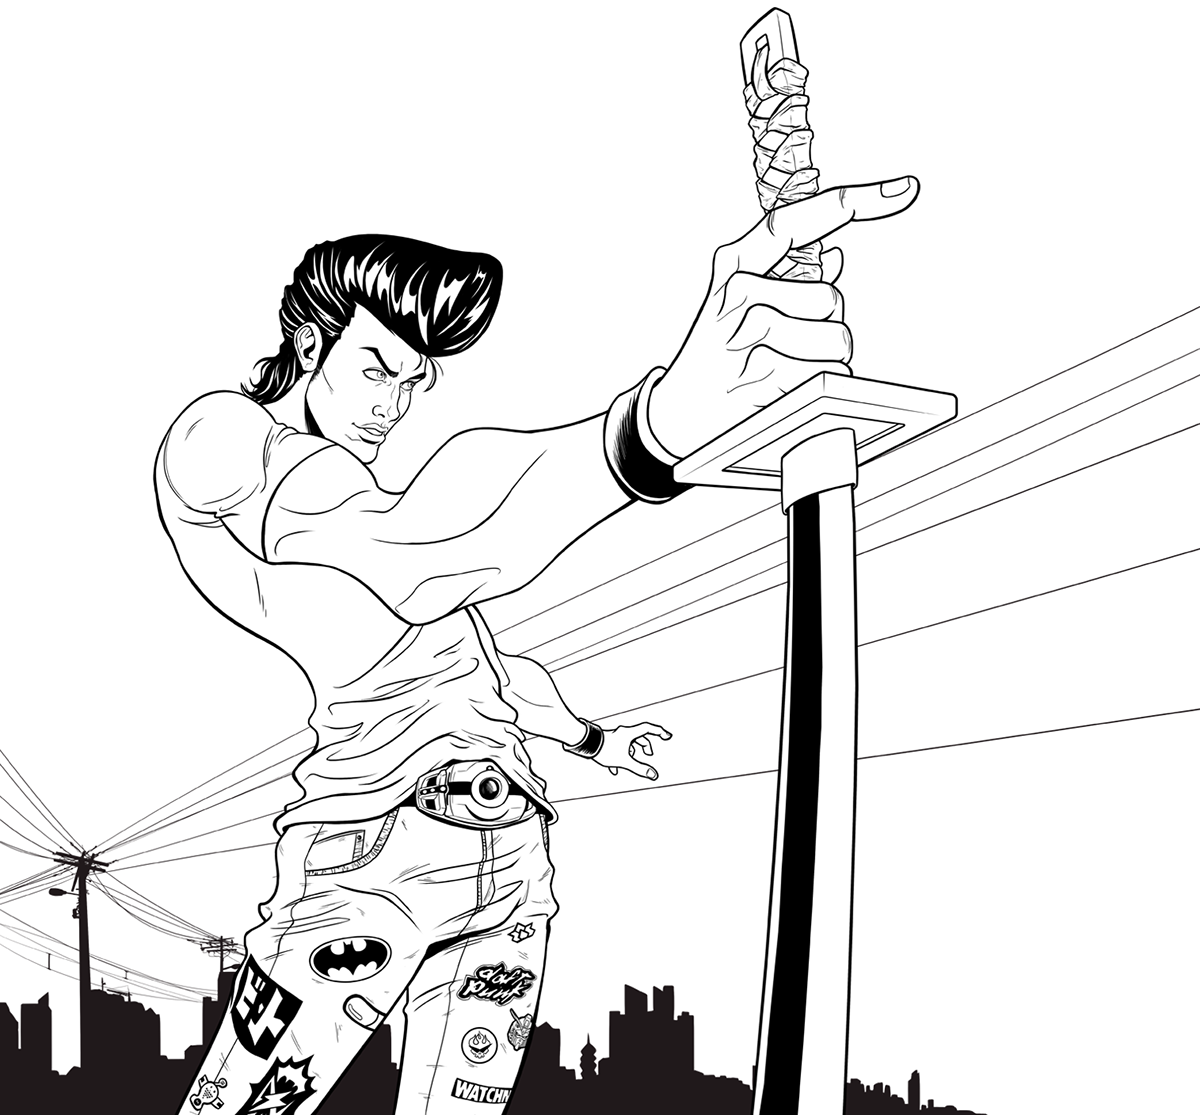 panama Street samurai city punk anime fan culture Sword delinquent